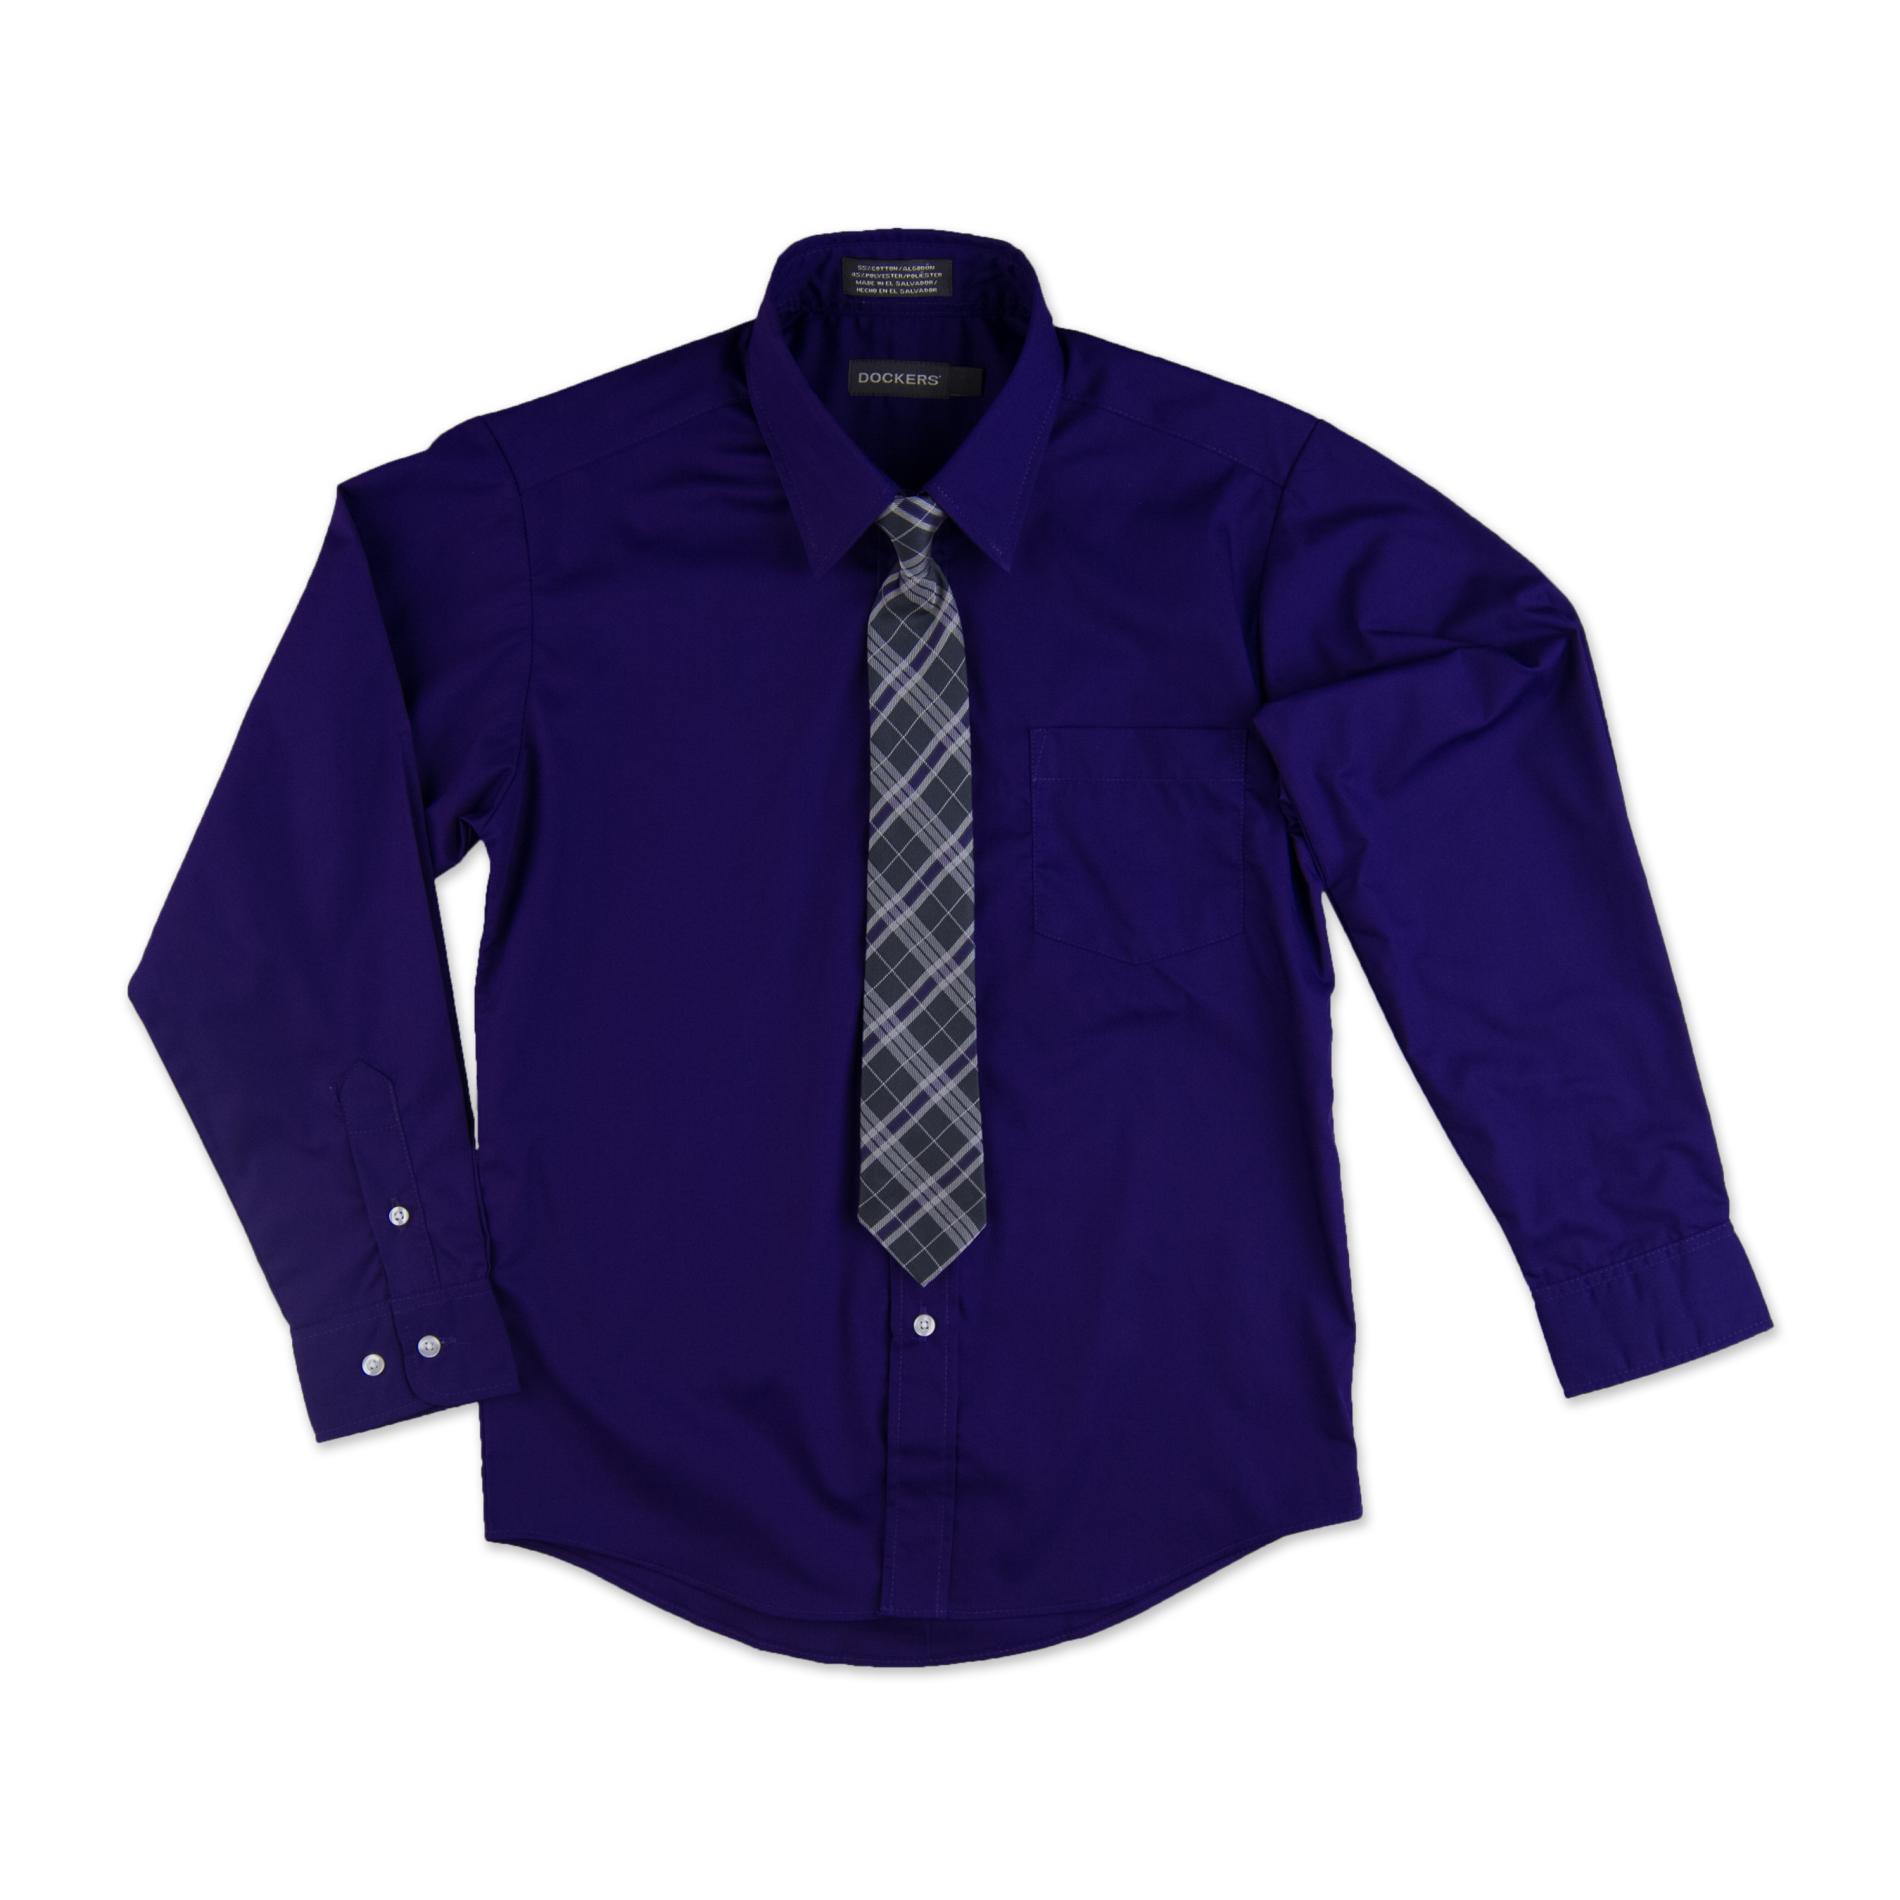 Dockers Boy's Dress Shirt & Necktie - Plaid